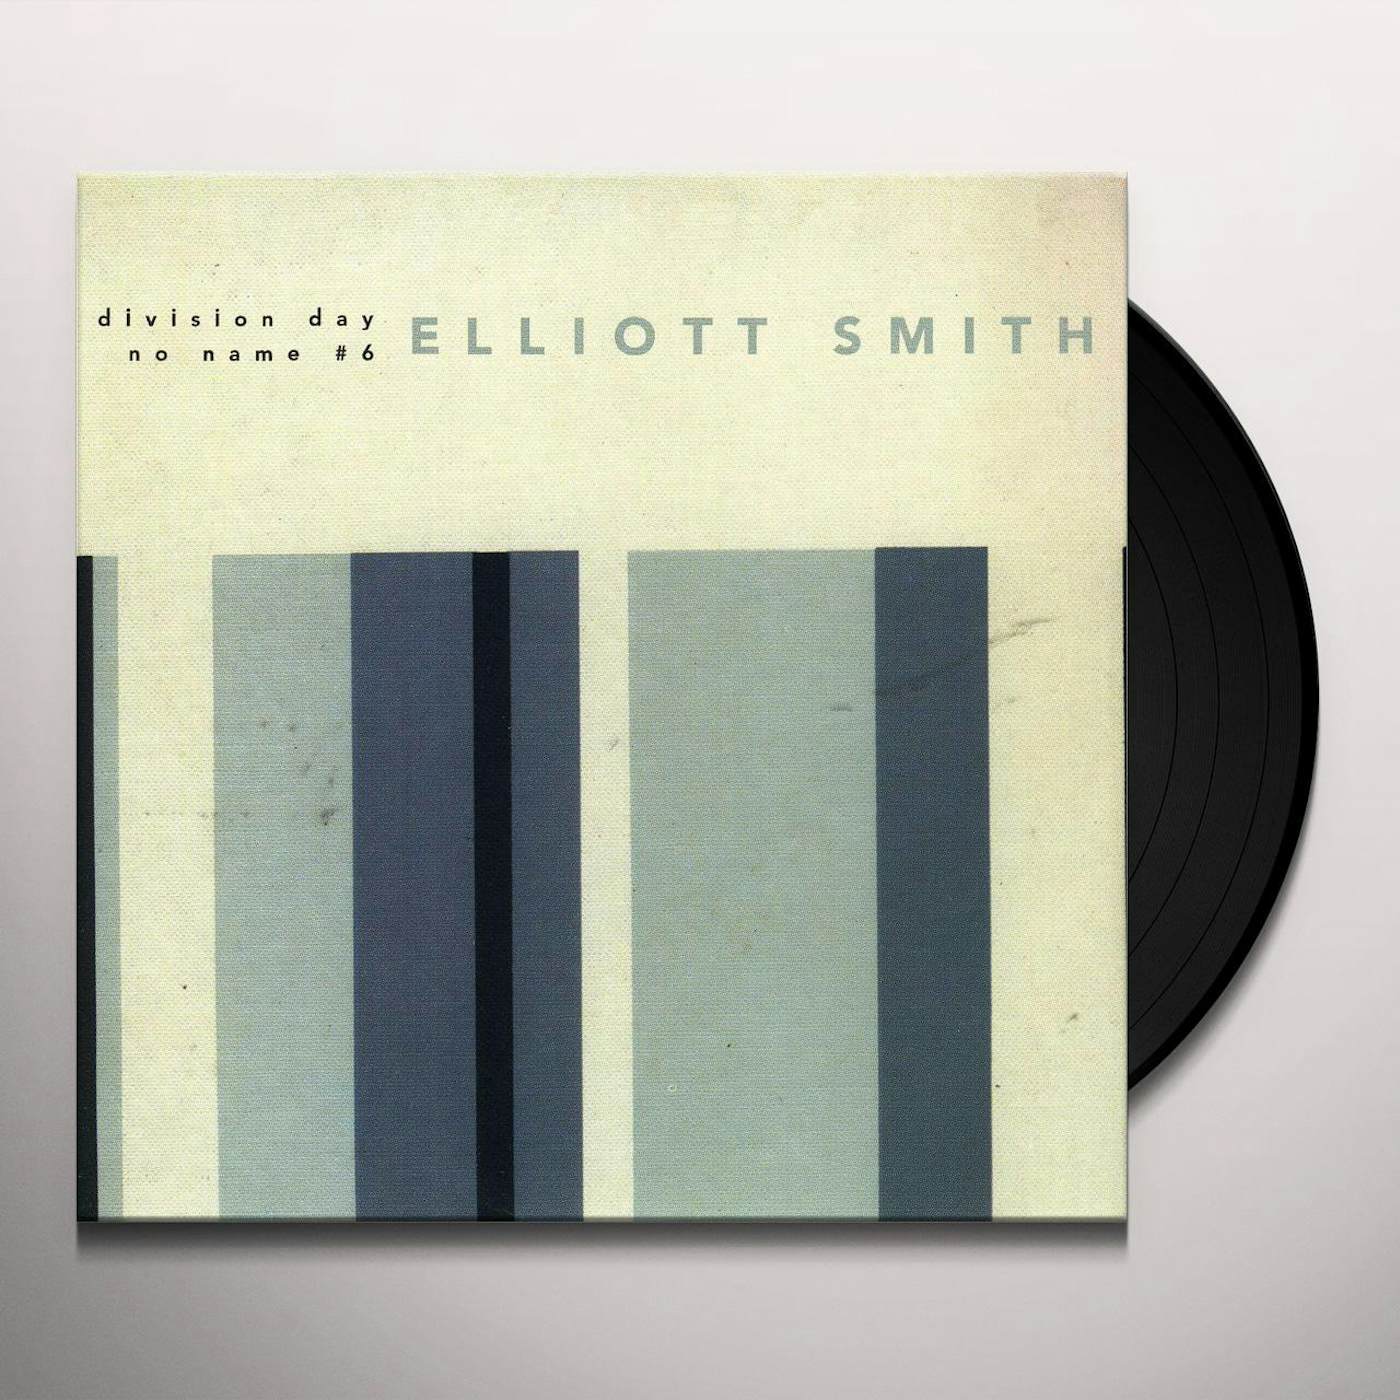 Elliott Smith Division Day Vinyl Record